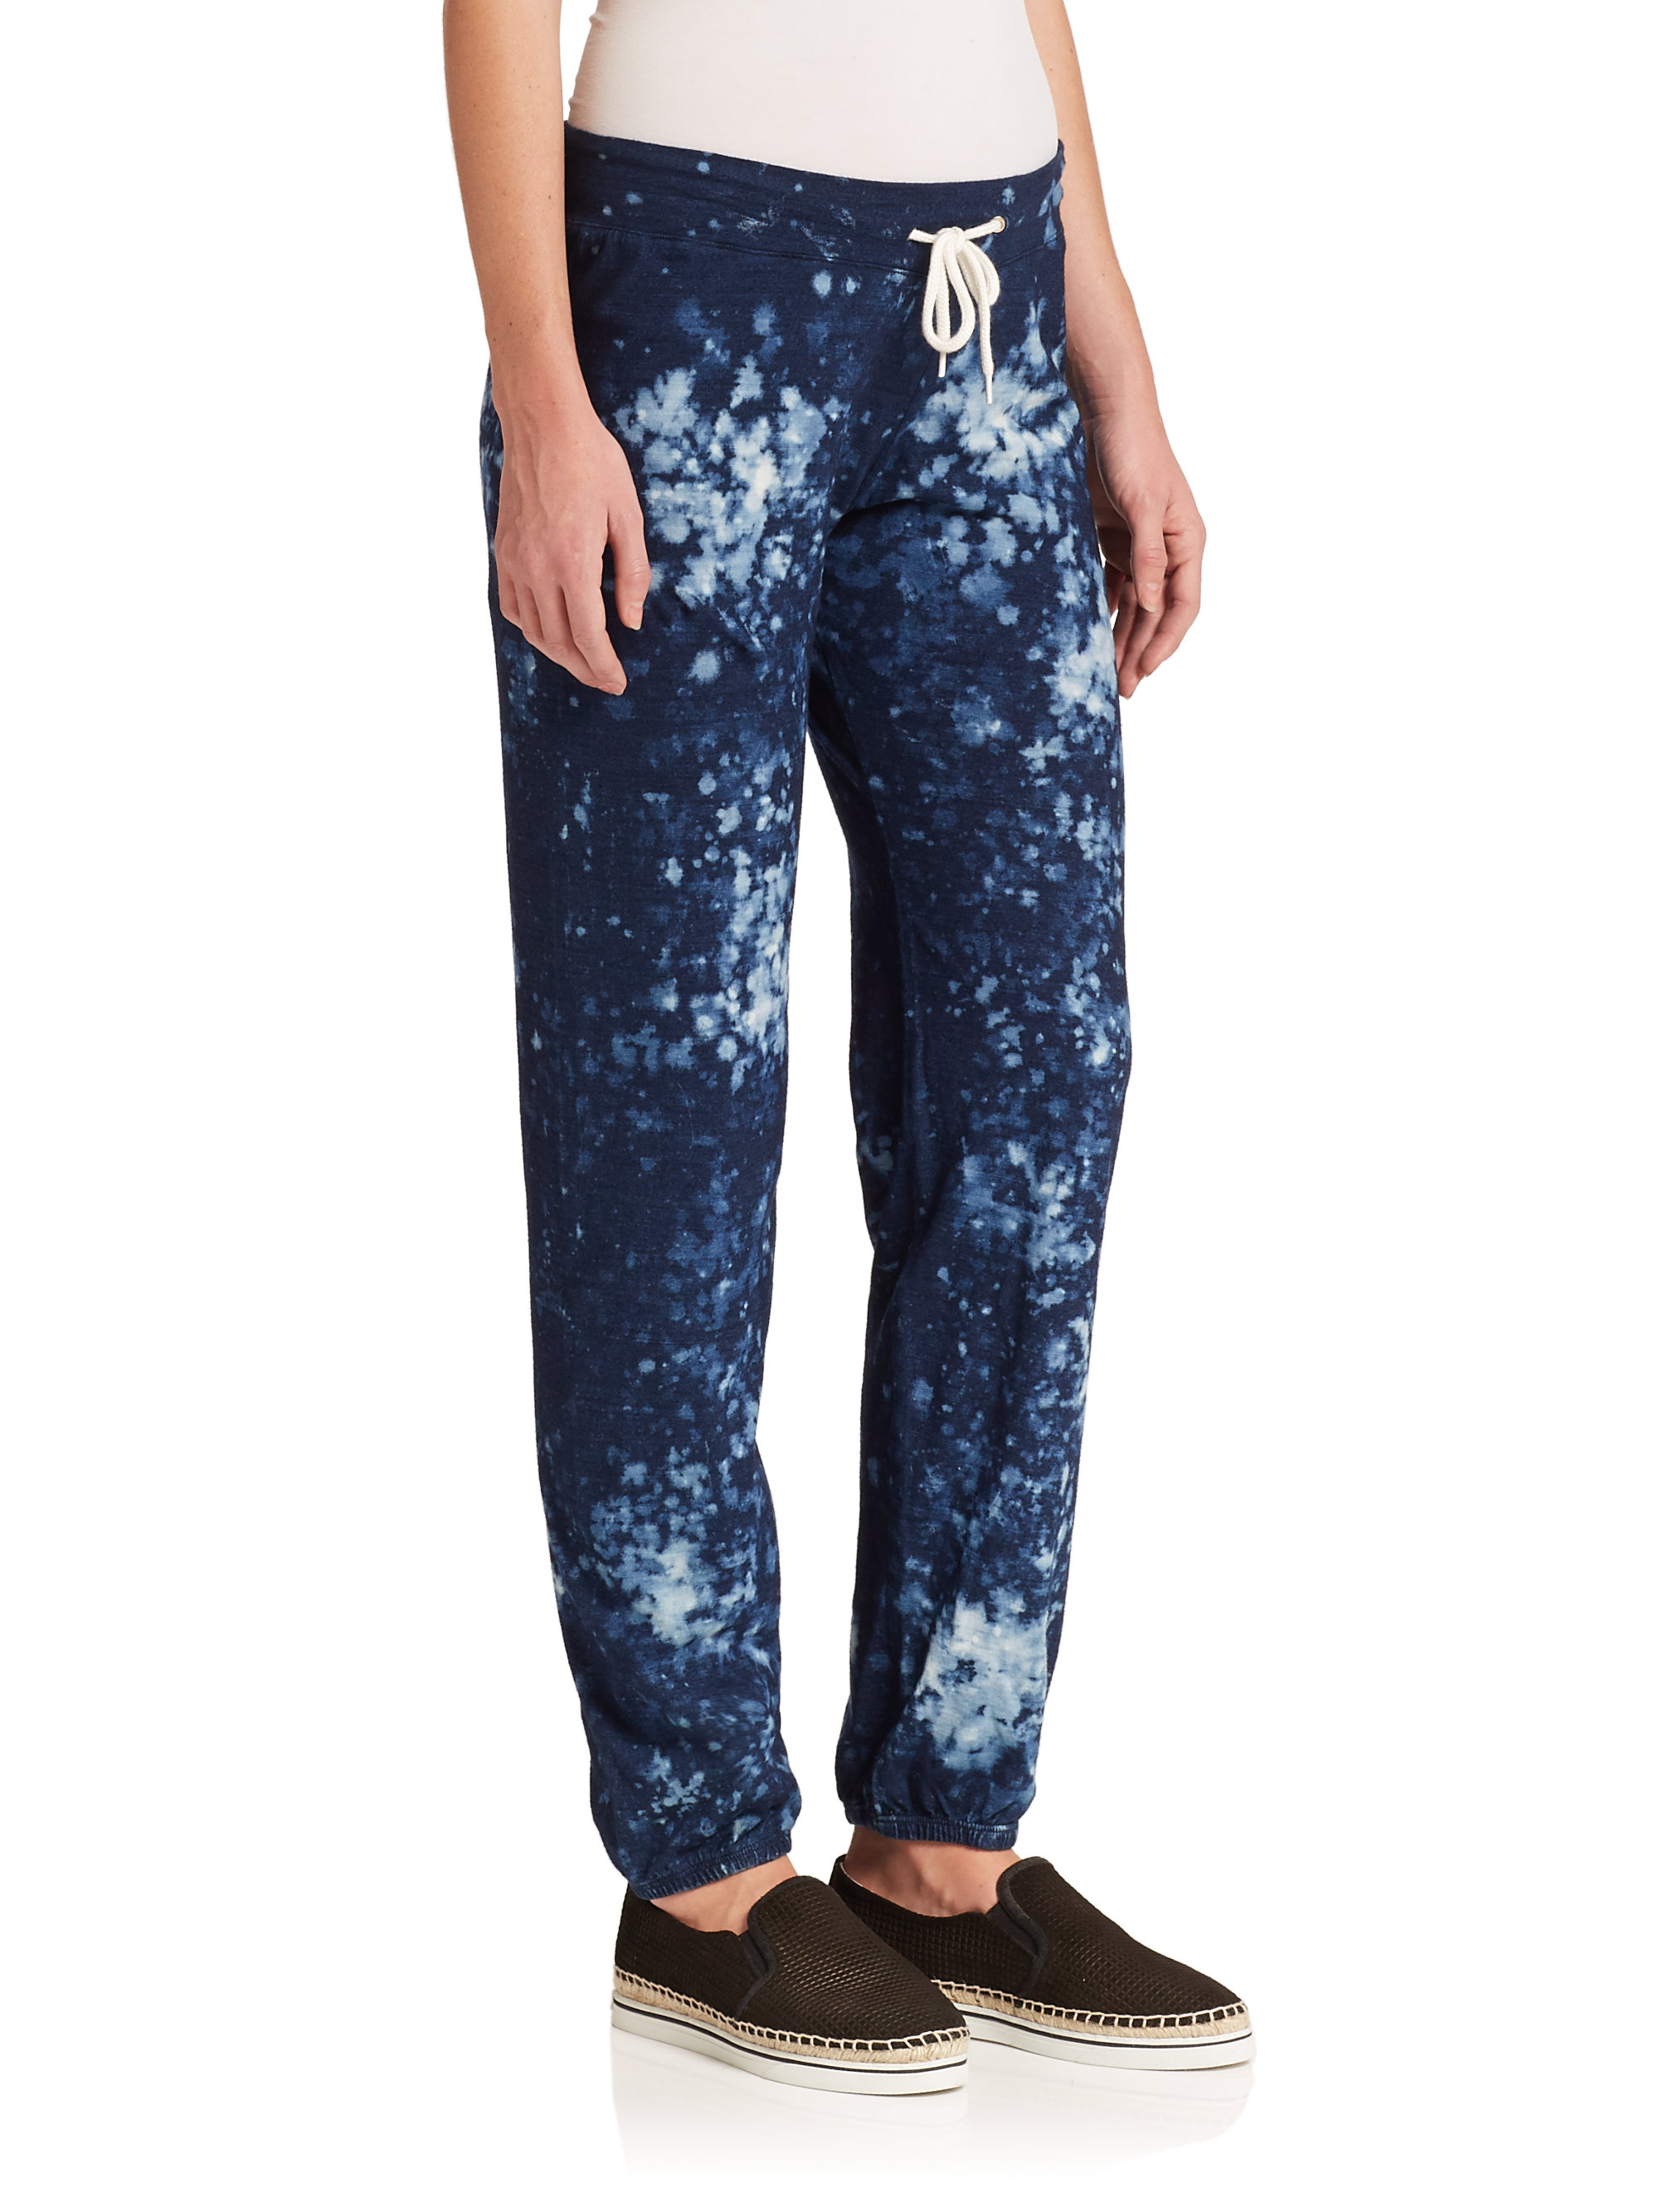 Lyst - Monrow Printed Drawstring Sweatpants in Blue